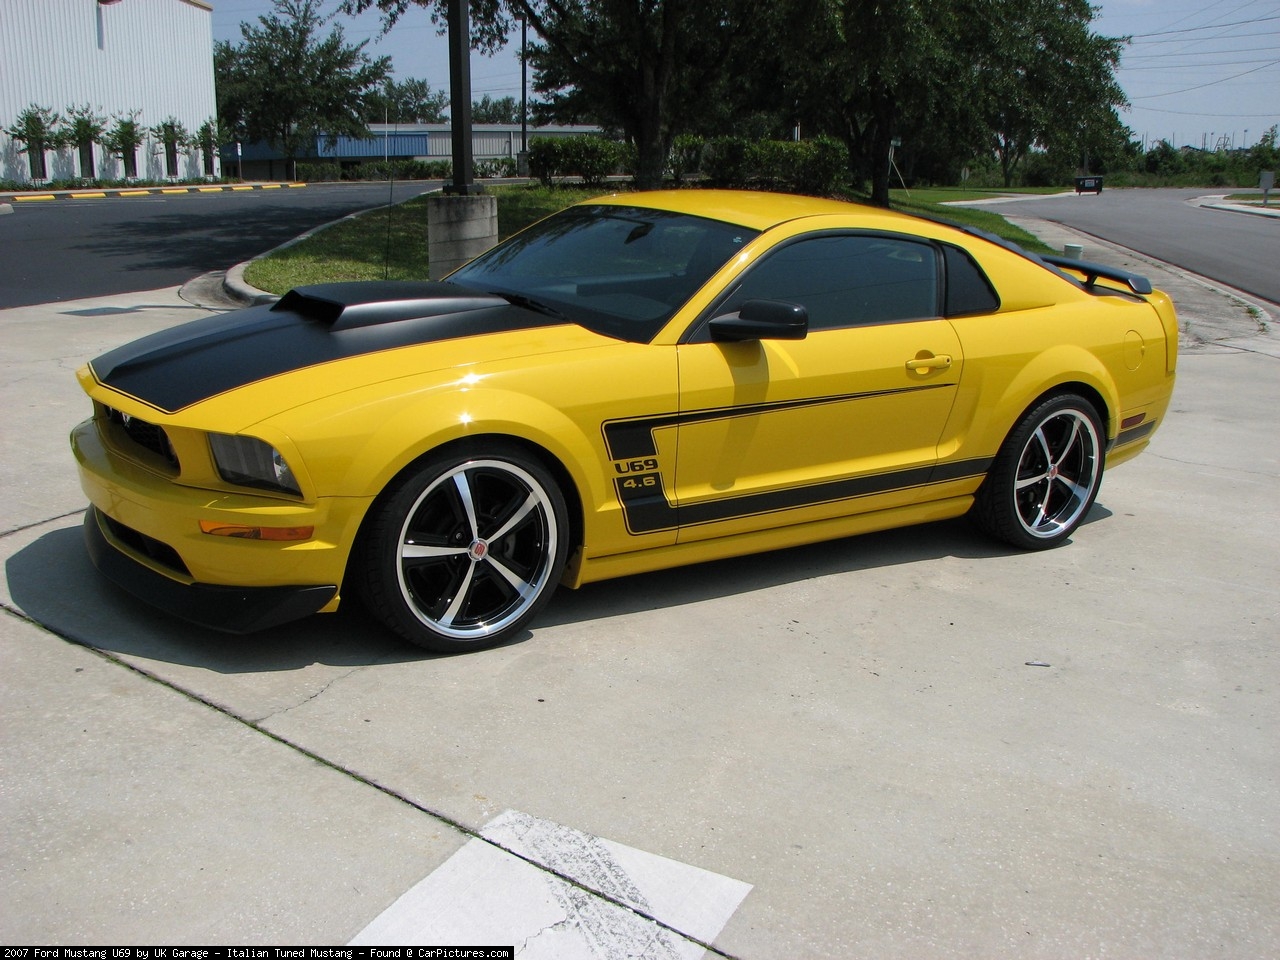 2007_Ford_Mustang_U69_by_UK_Garage_Italian_Tuned_Mustang_A_full.jpeg